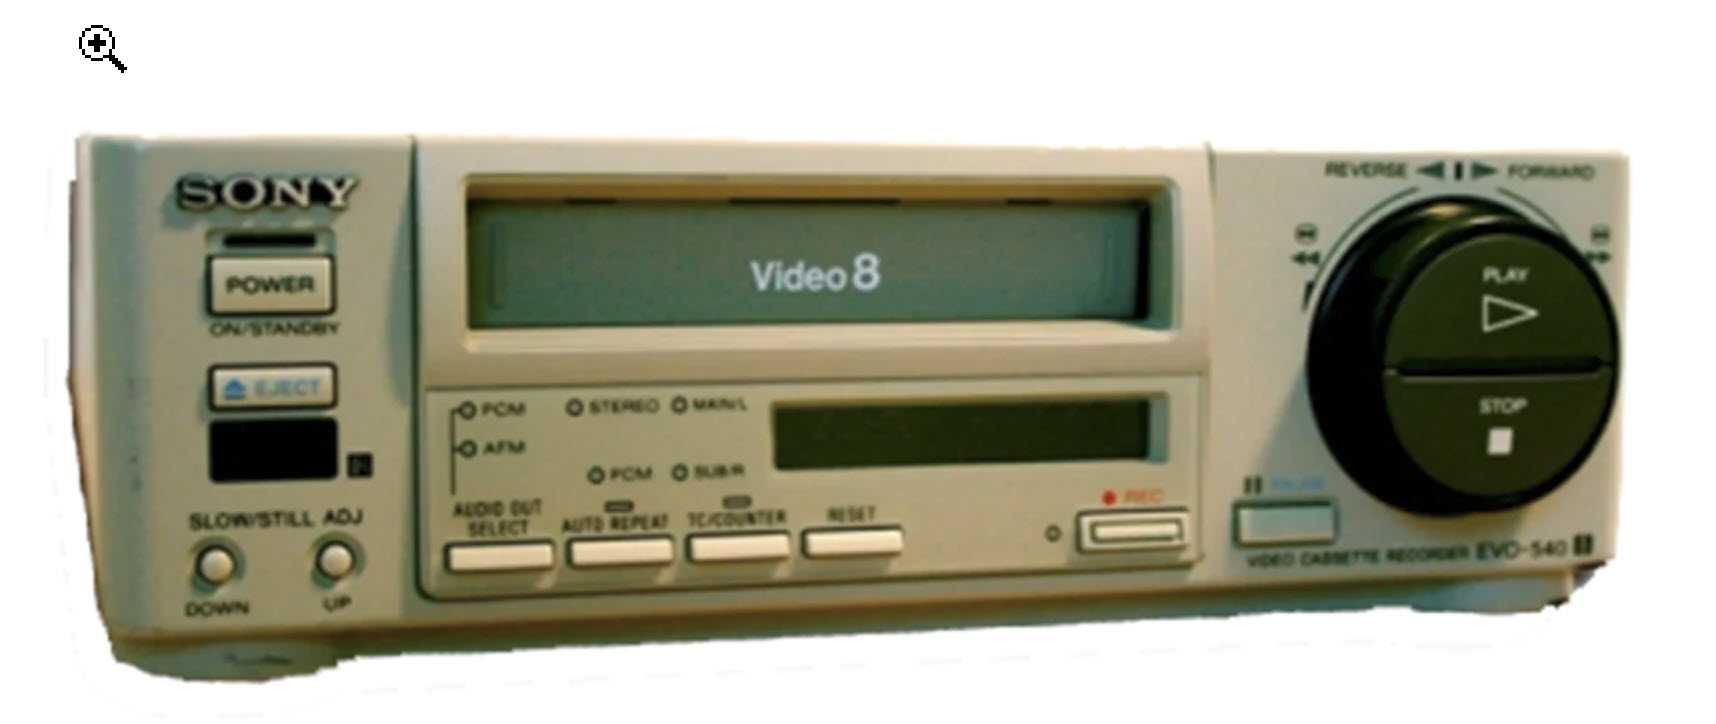 Przegrywanie kaset VHS Warszawa HI8 Minidv Audio 10.-23 7dni 15zł/szt